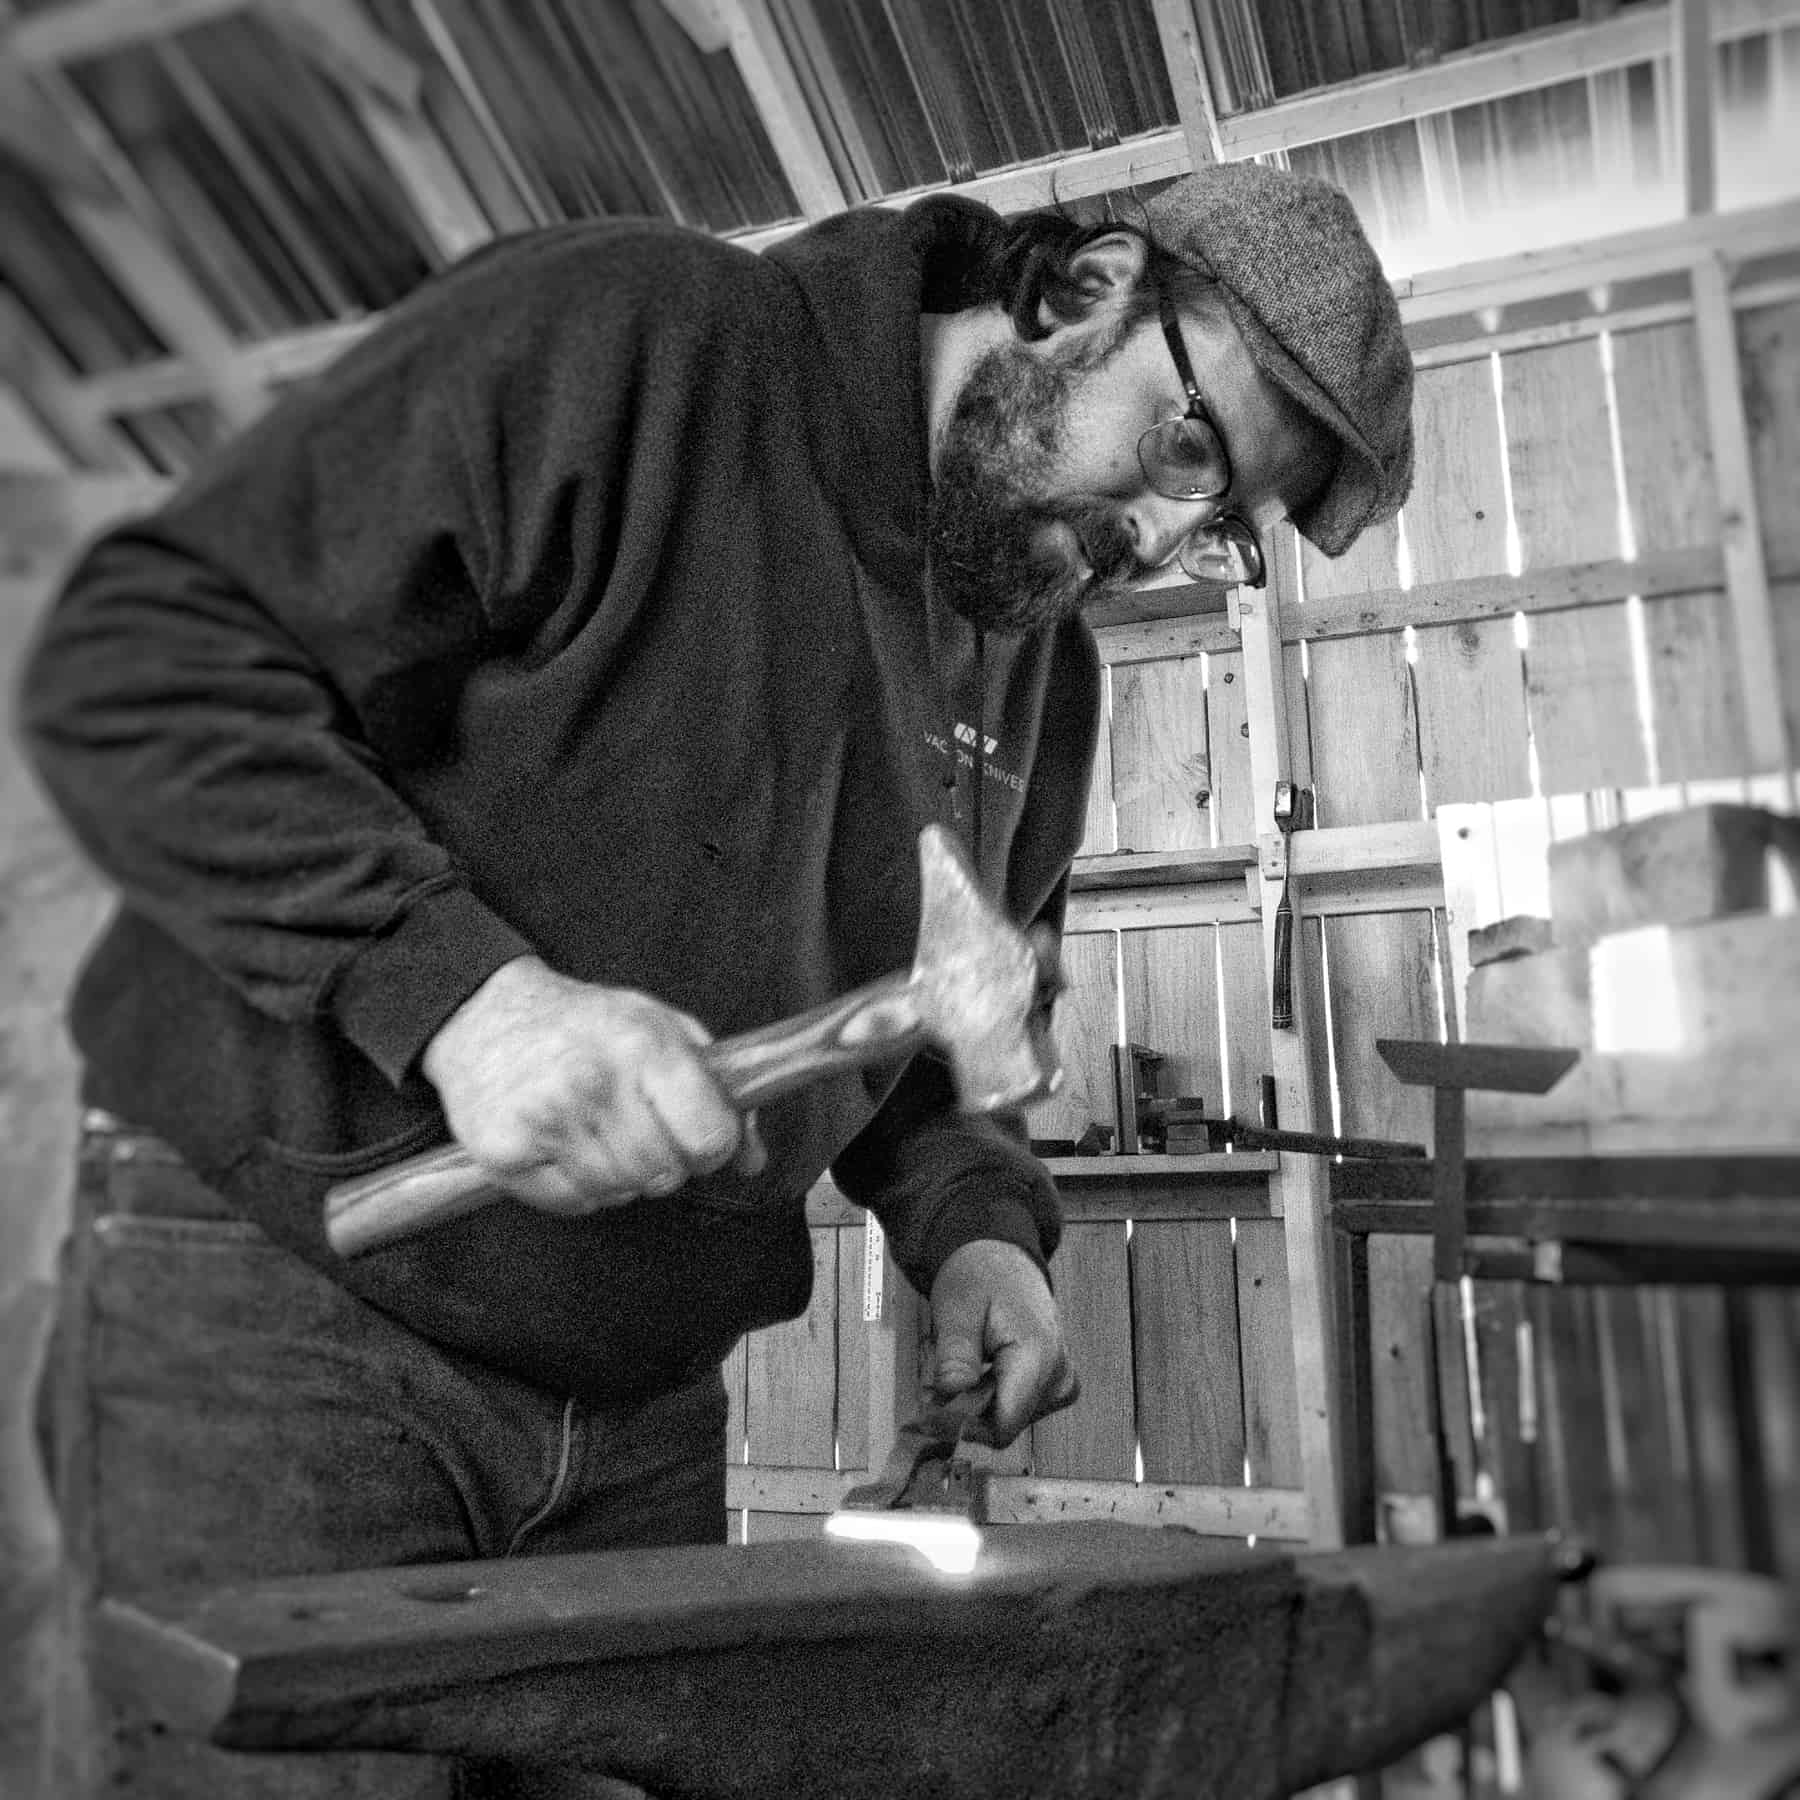 Noah Vachon makes his knives at his workshop in Quebec.